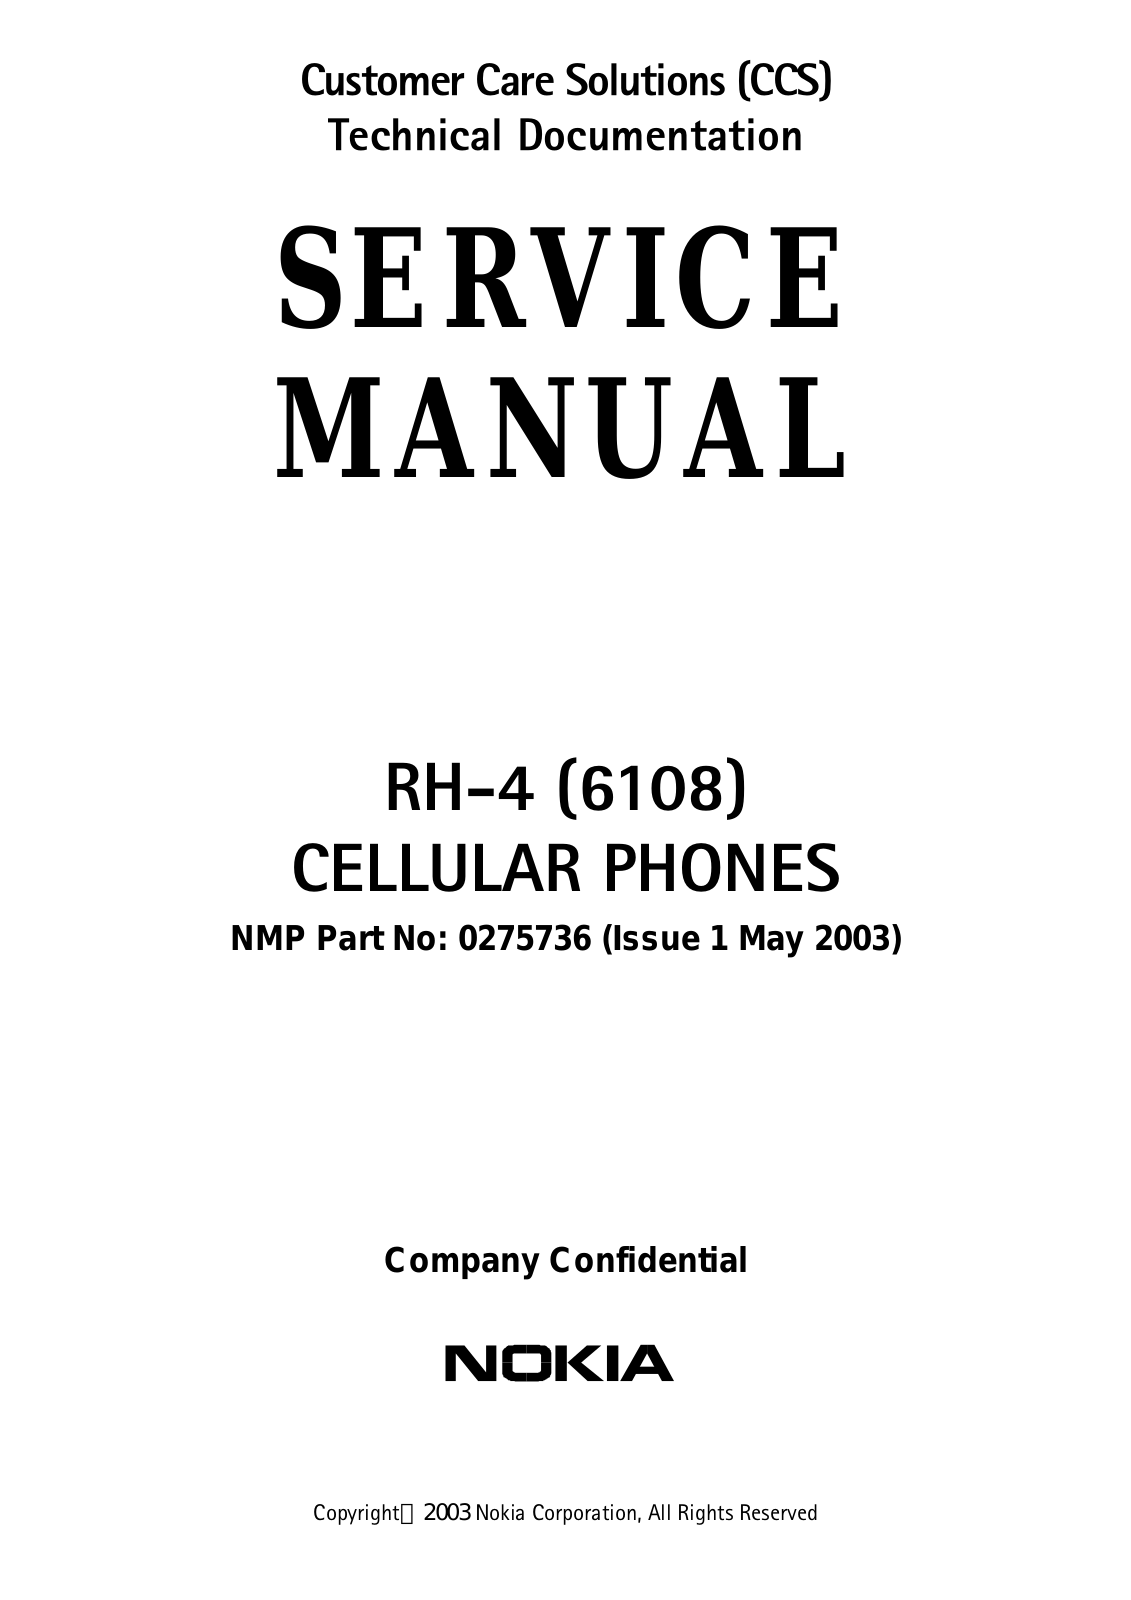 Nokia 6108 Service Manual 00 rh4 foreword